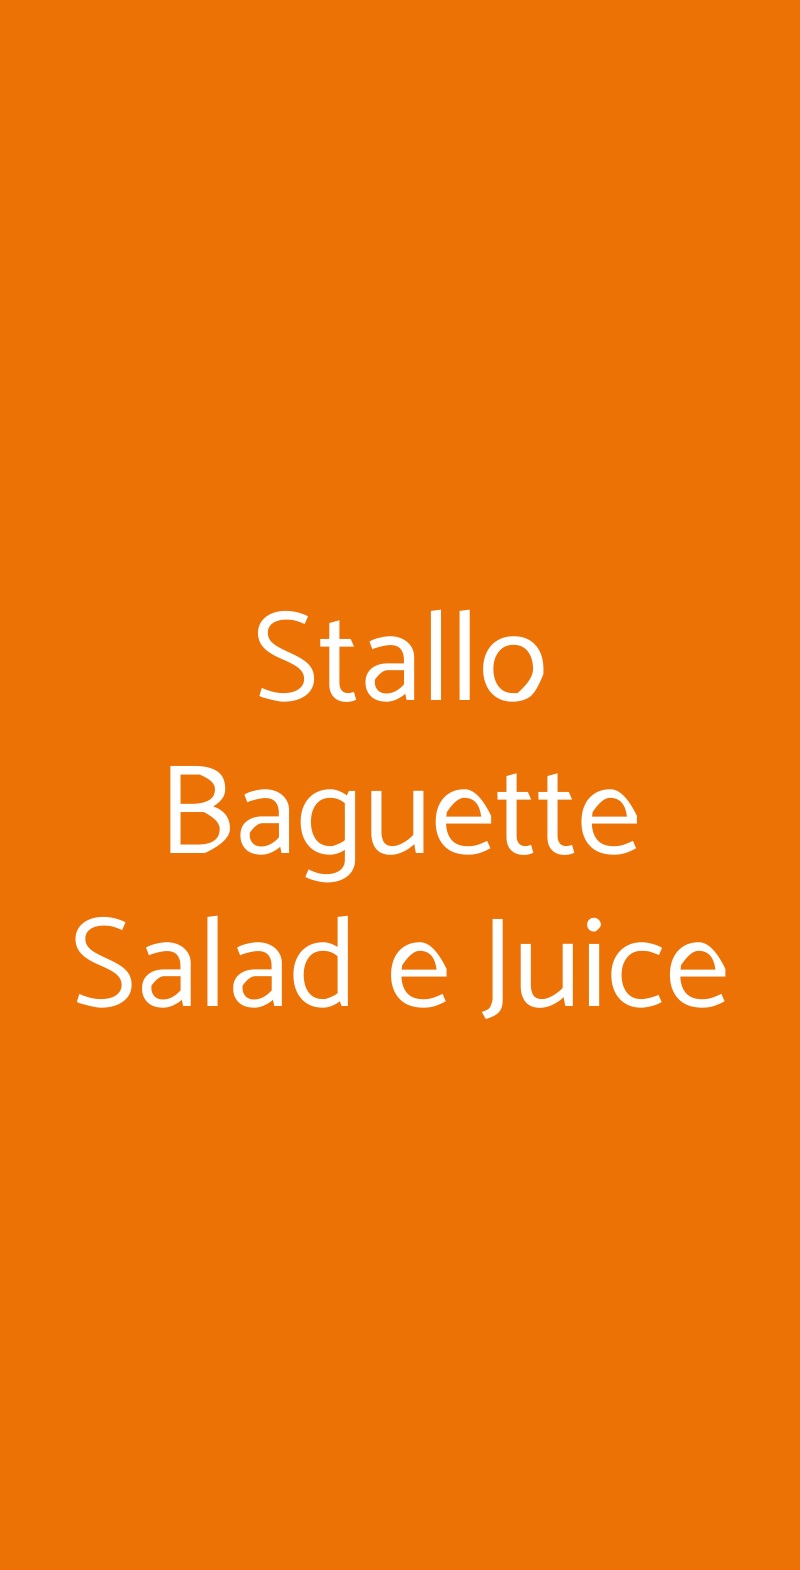 Stallo Baguette Salad e Juice Roma menù 1 pagina